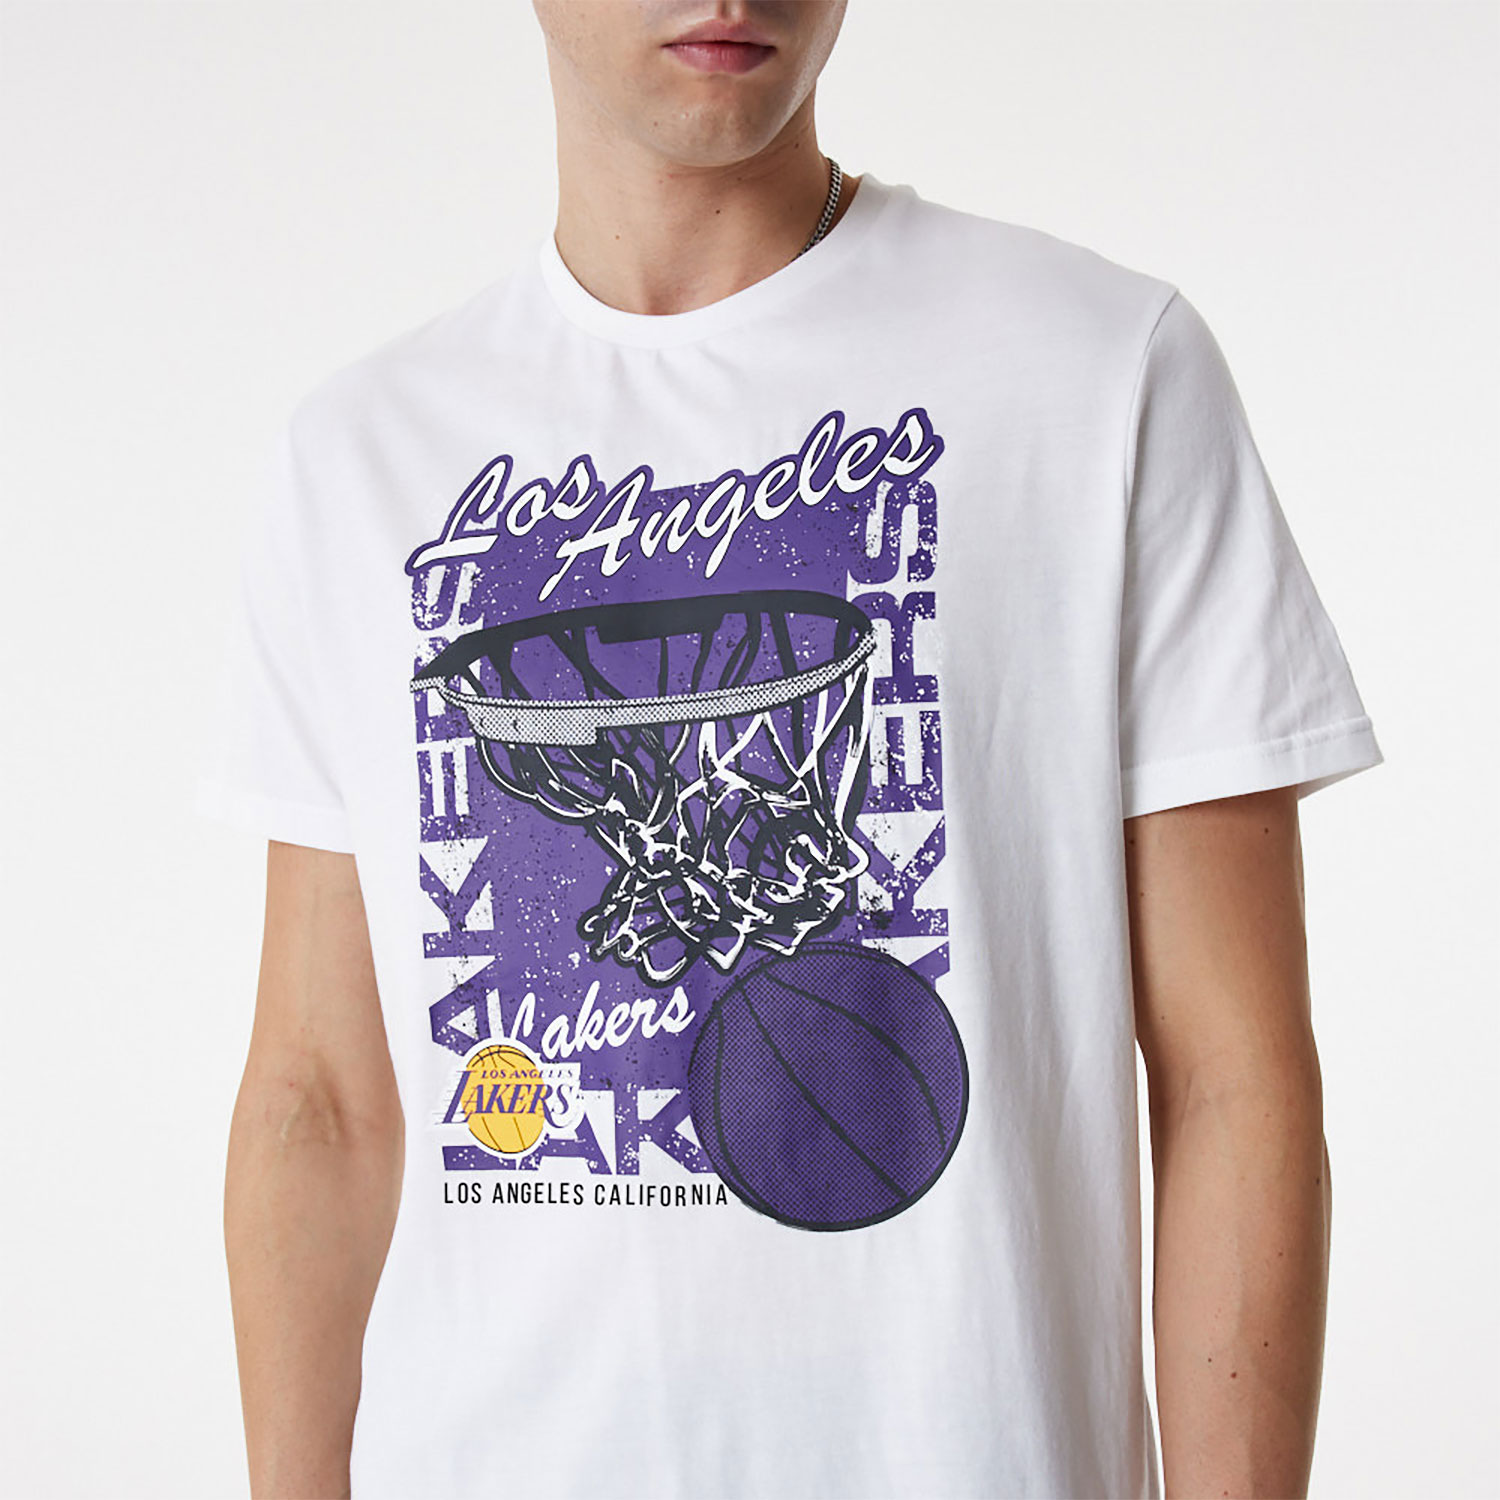 LA Lakers Basketball Graphic White T-Shirt